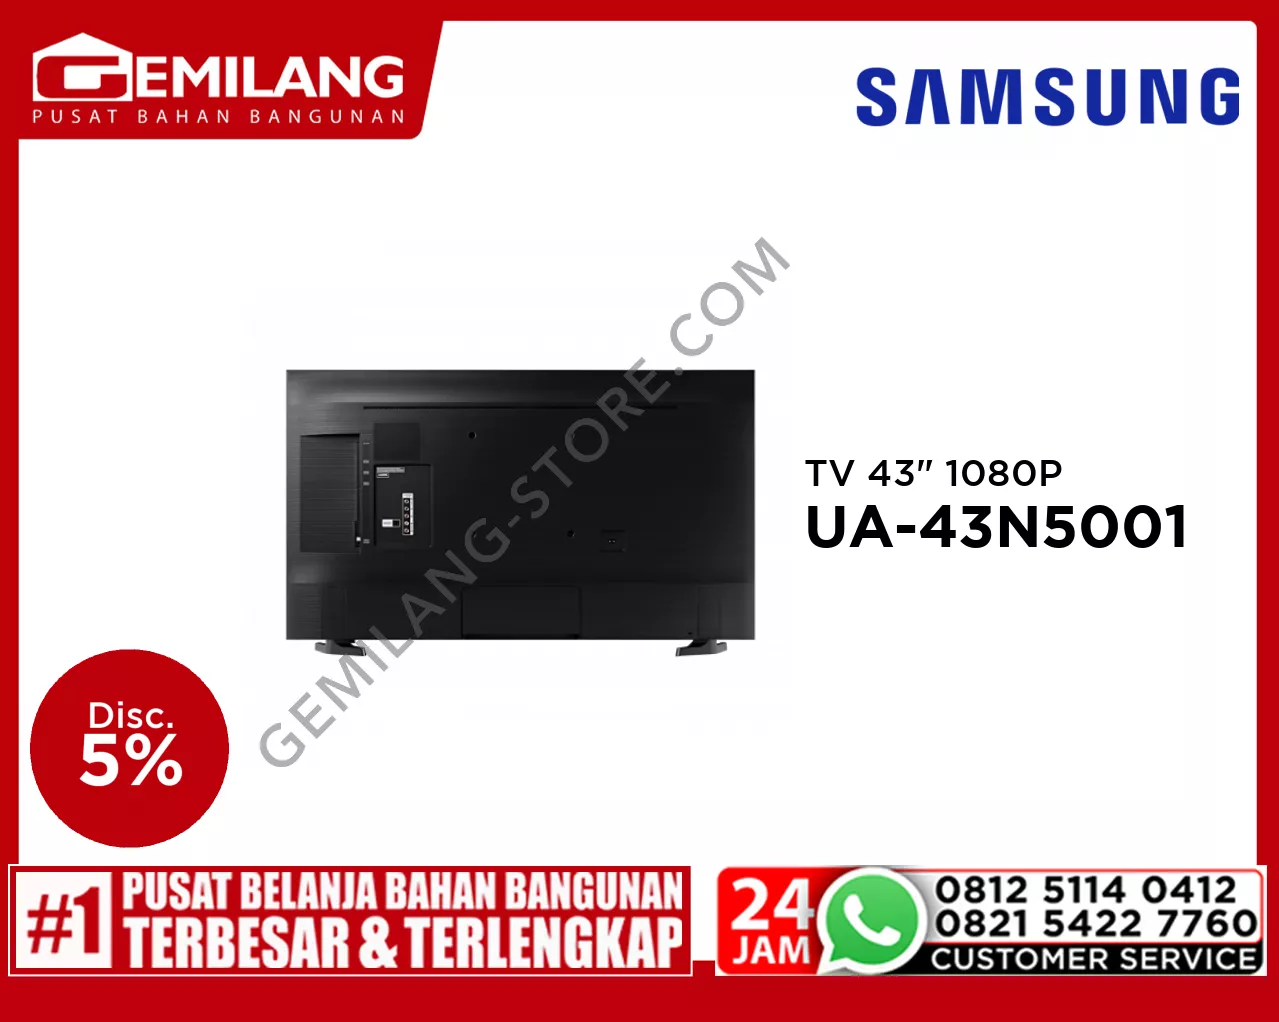 SAMSUNG TV UA-43N5001 43inch